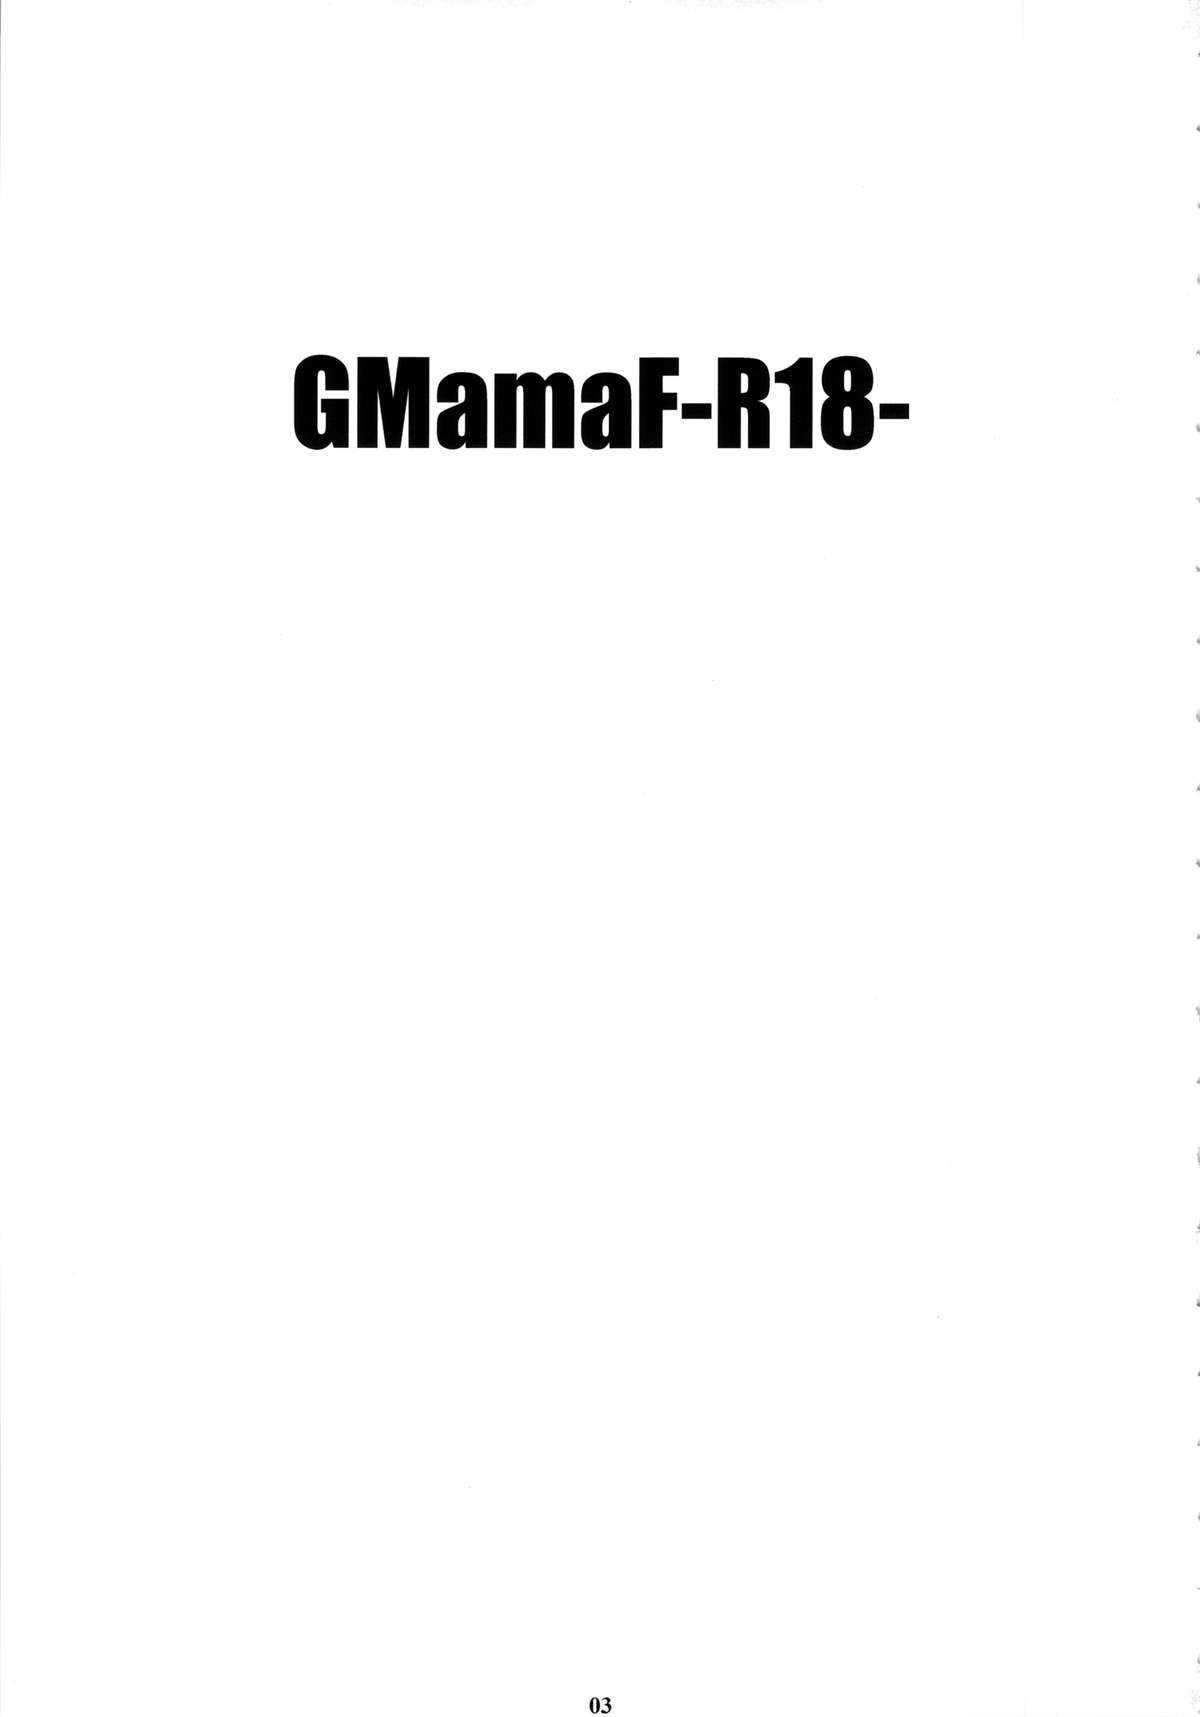 GMamaF 1